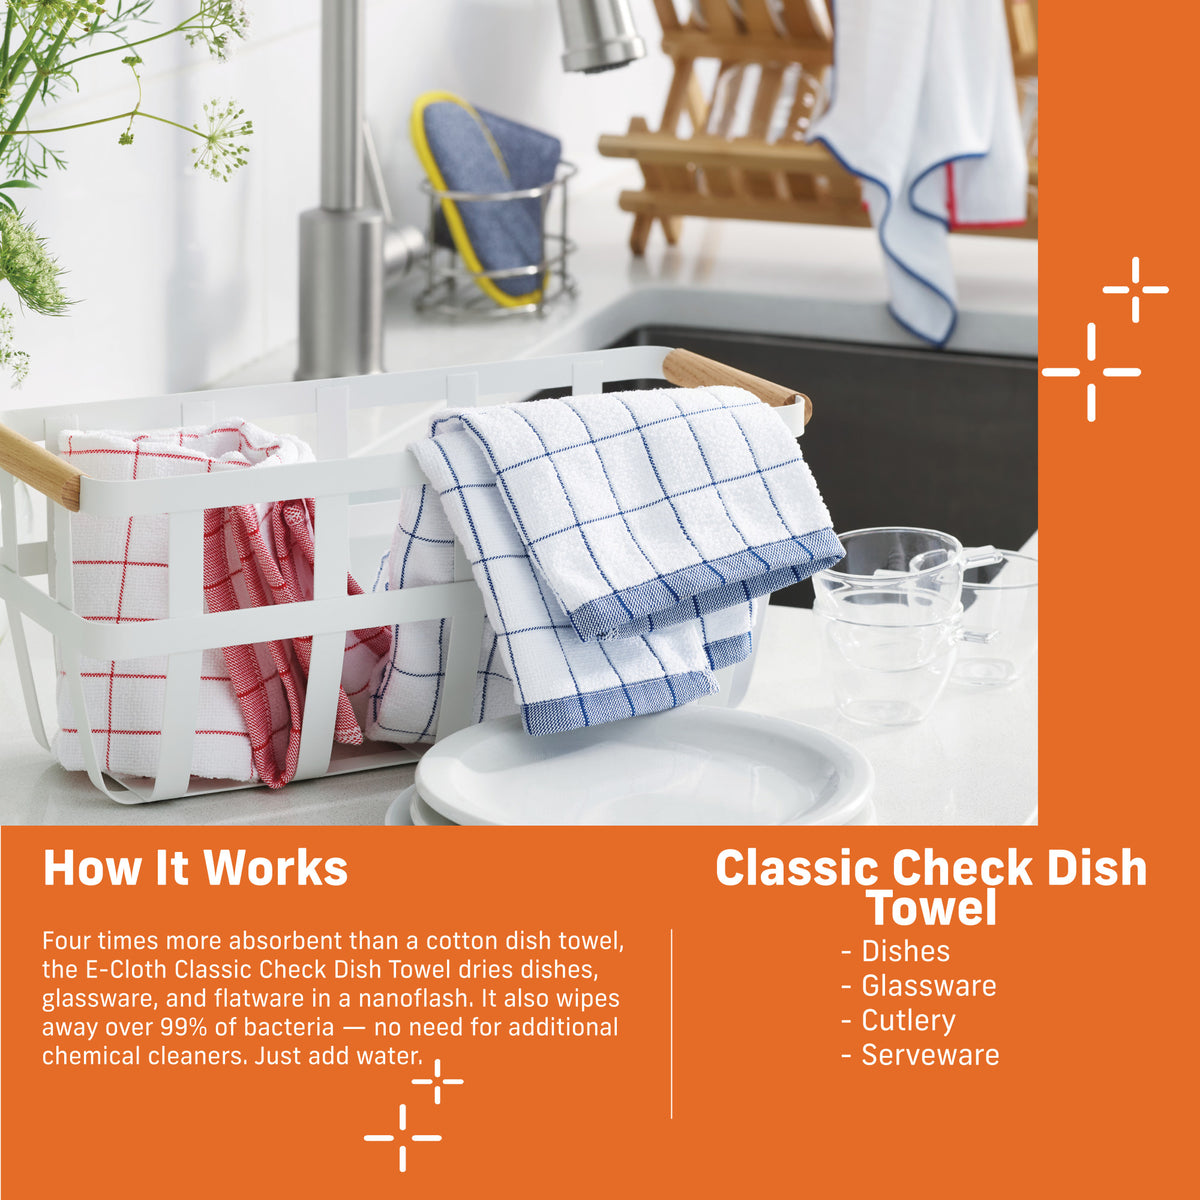 Classic Check Dish Towel